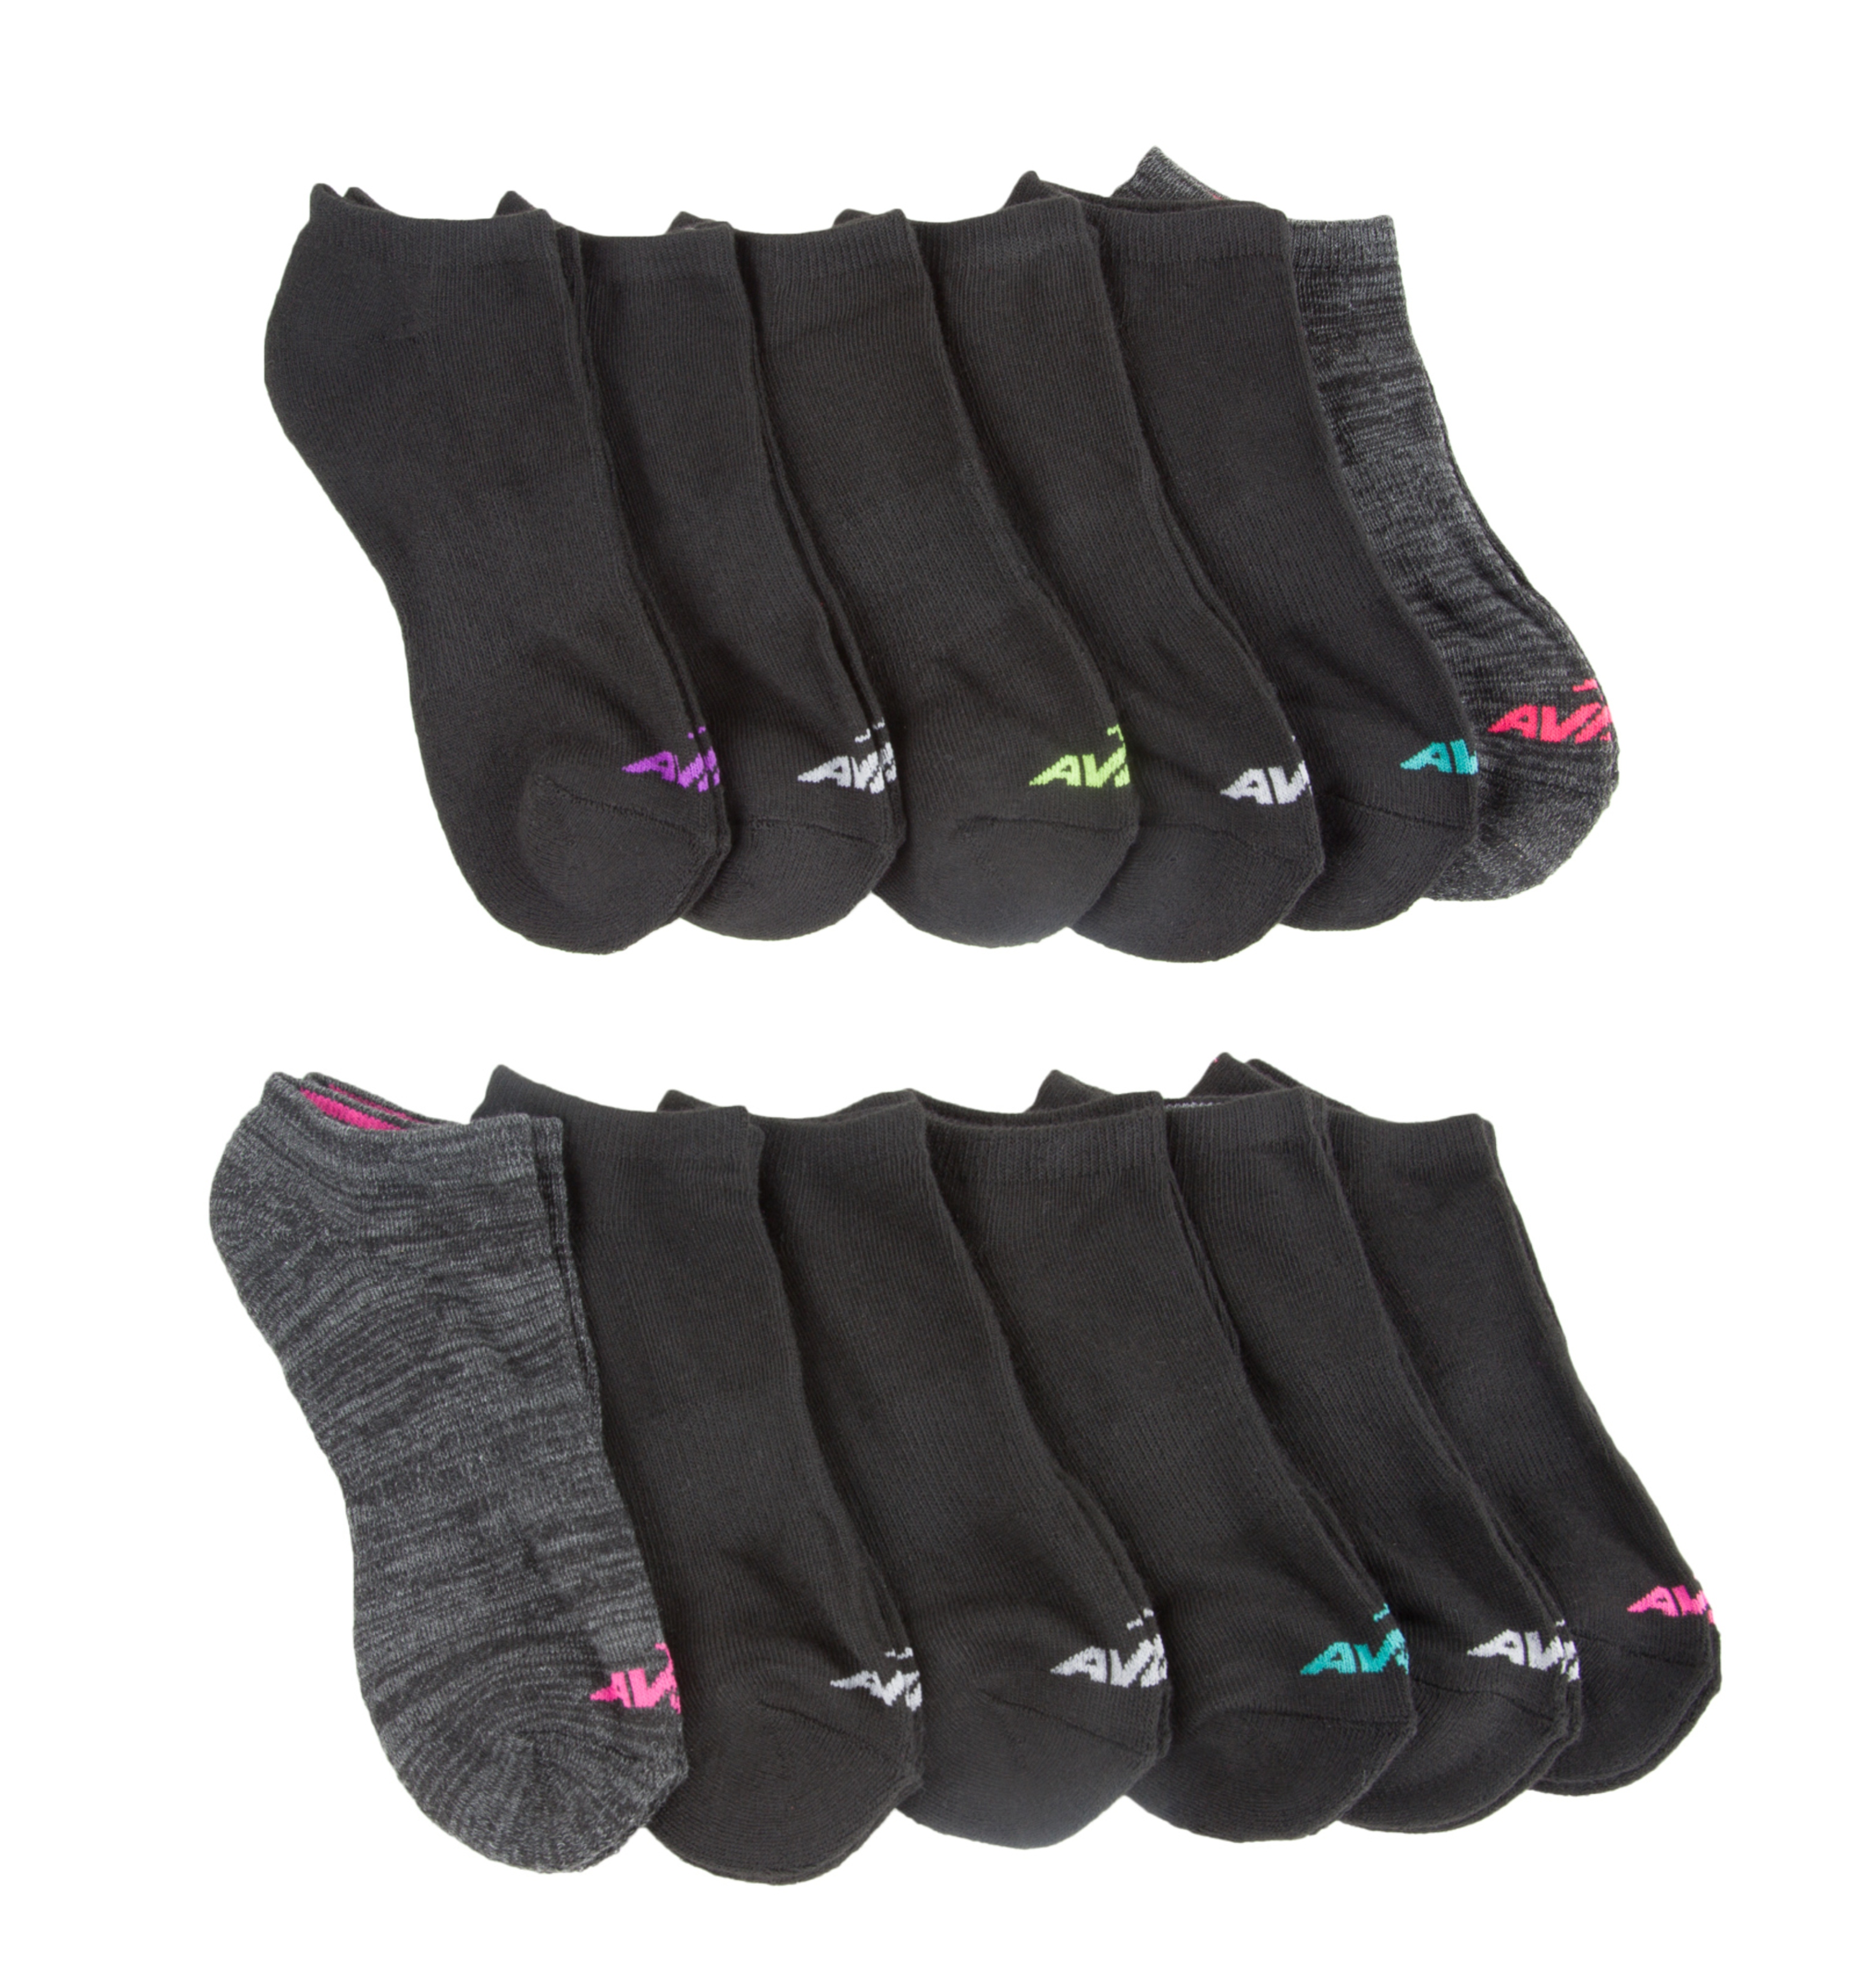 AVIA Women's 12 Pair Low Cut Socks Sz 4-10 NEW | eBay